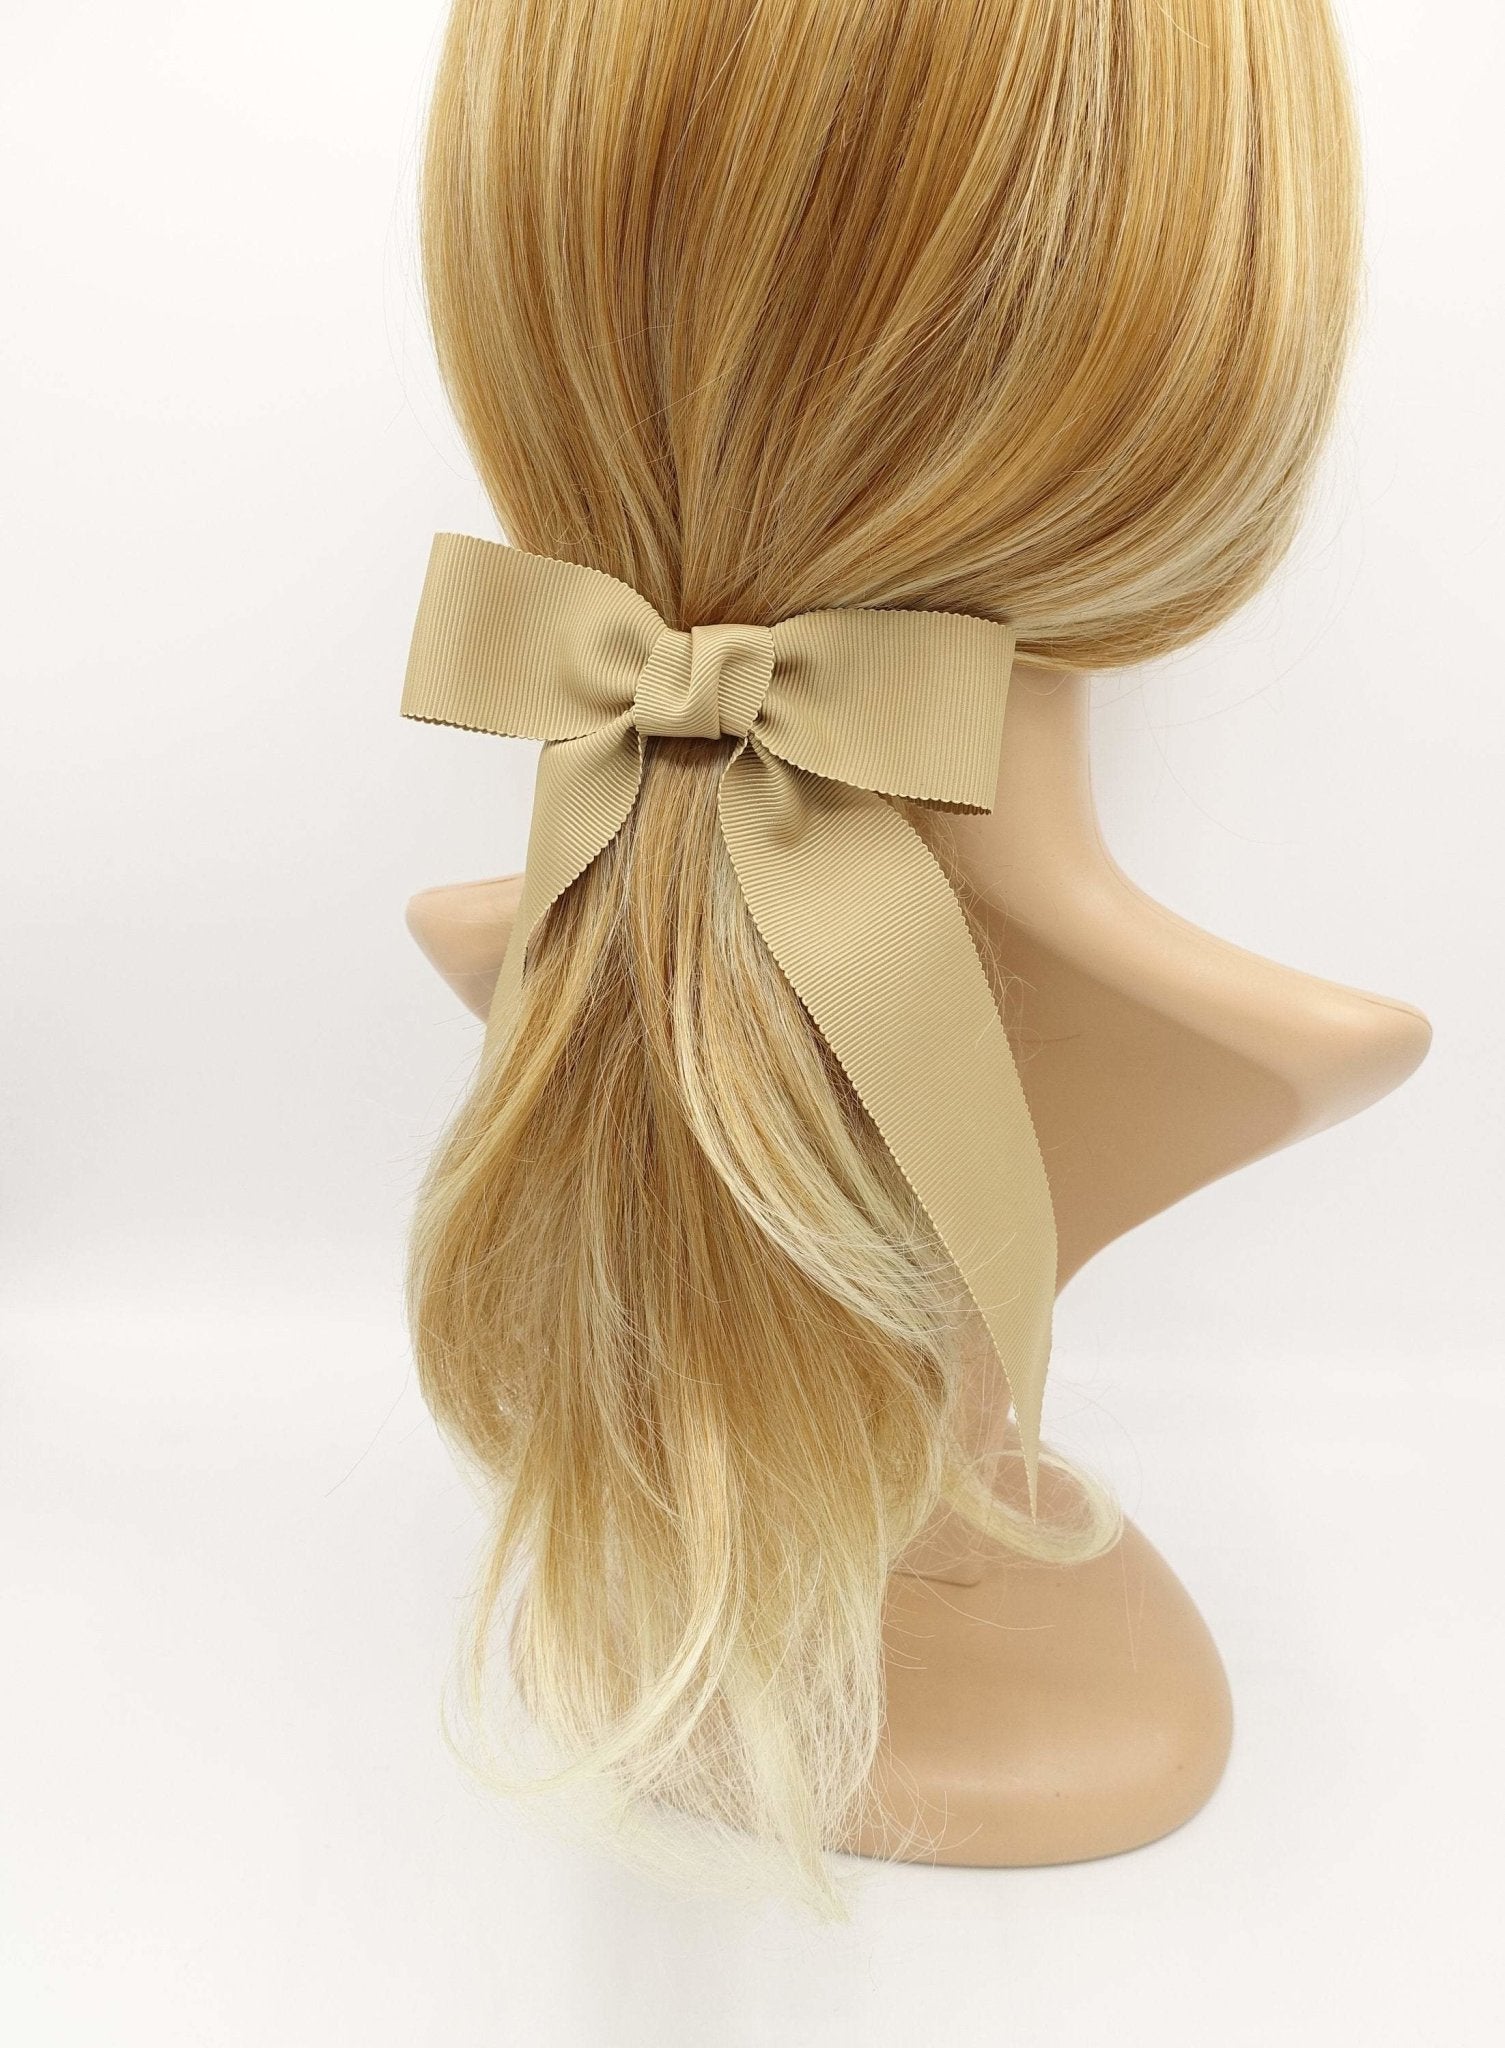 VeryShine claw/banana/barrette grosgrain tail hair bow basic style hair accessory for women